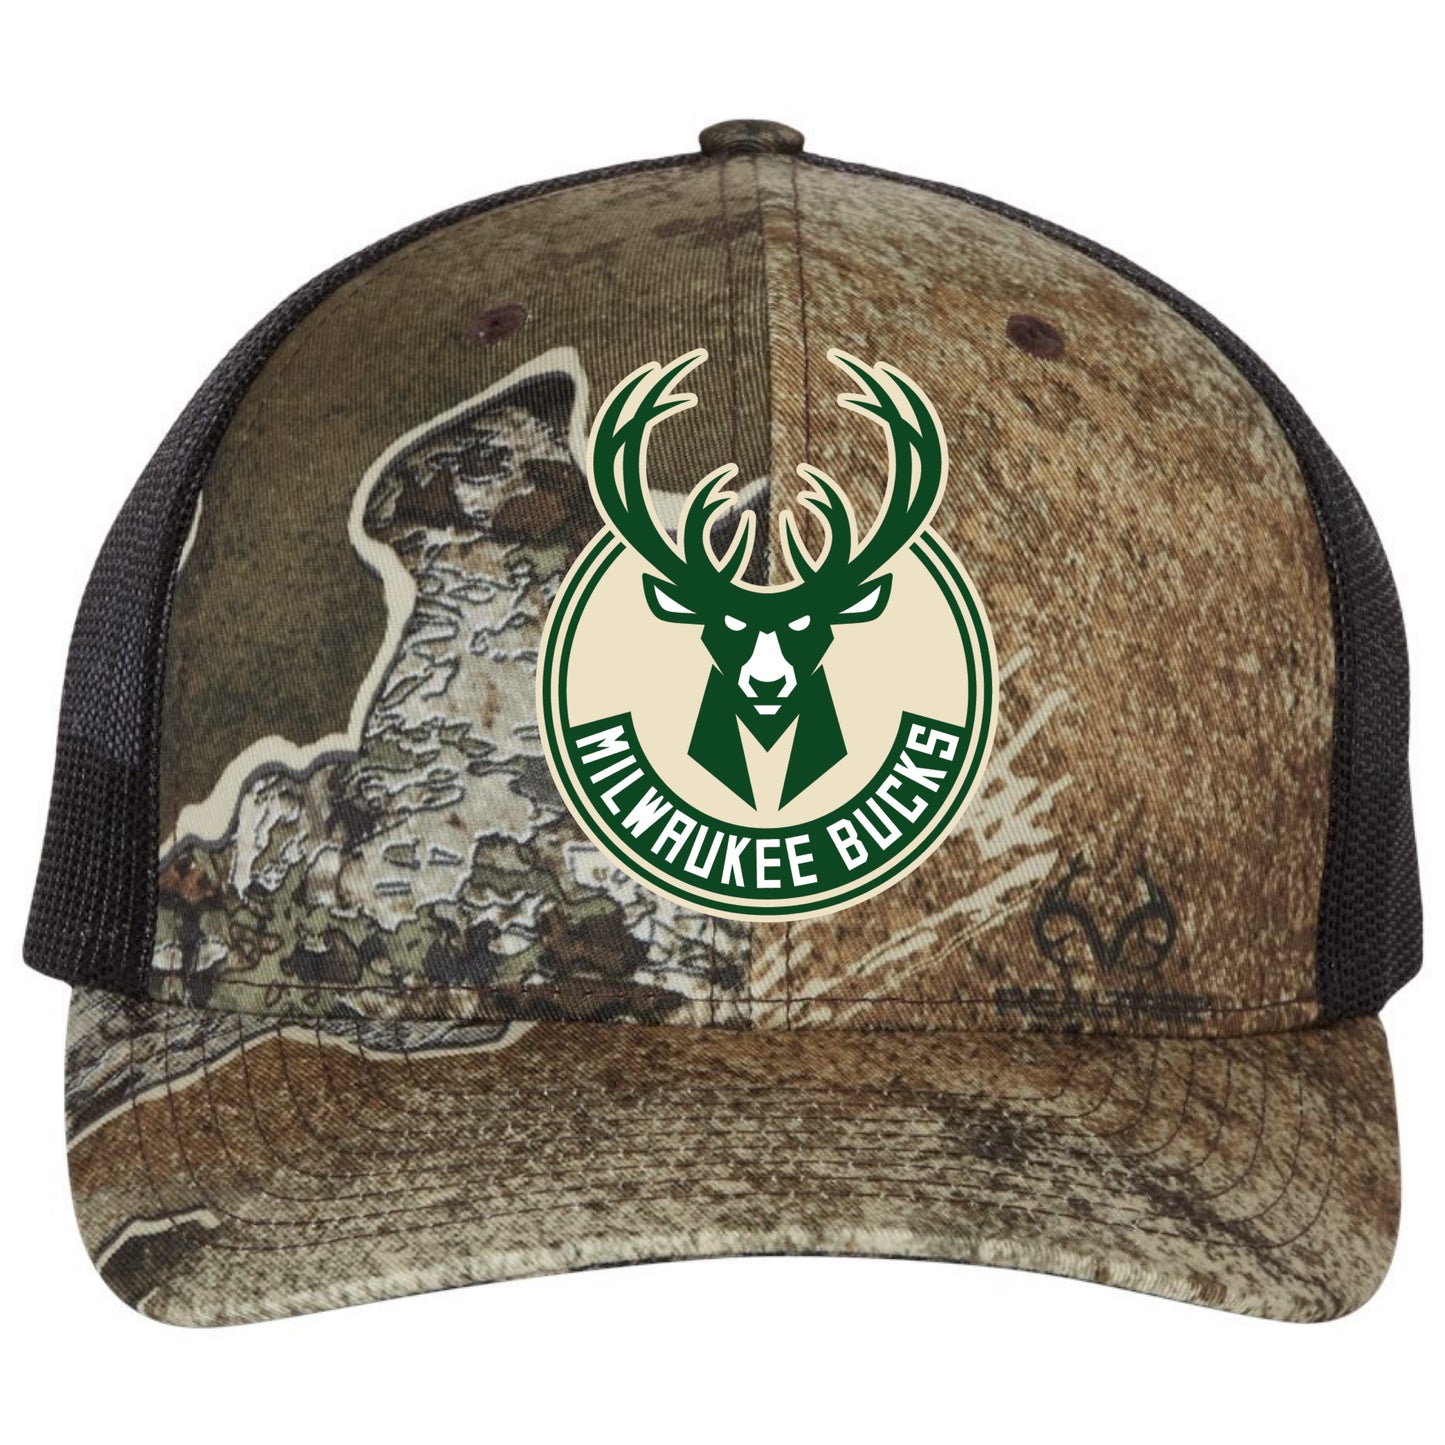 Milwaukee Bucks 3D Patterned Snapback Trucker Hat- Realtree Excape/ Black - Ten Gallon Hat Co.